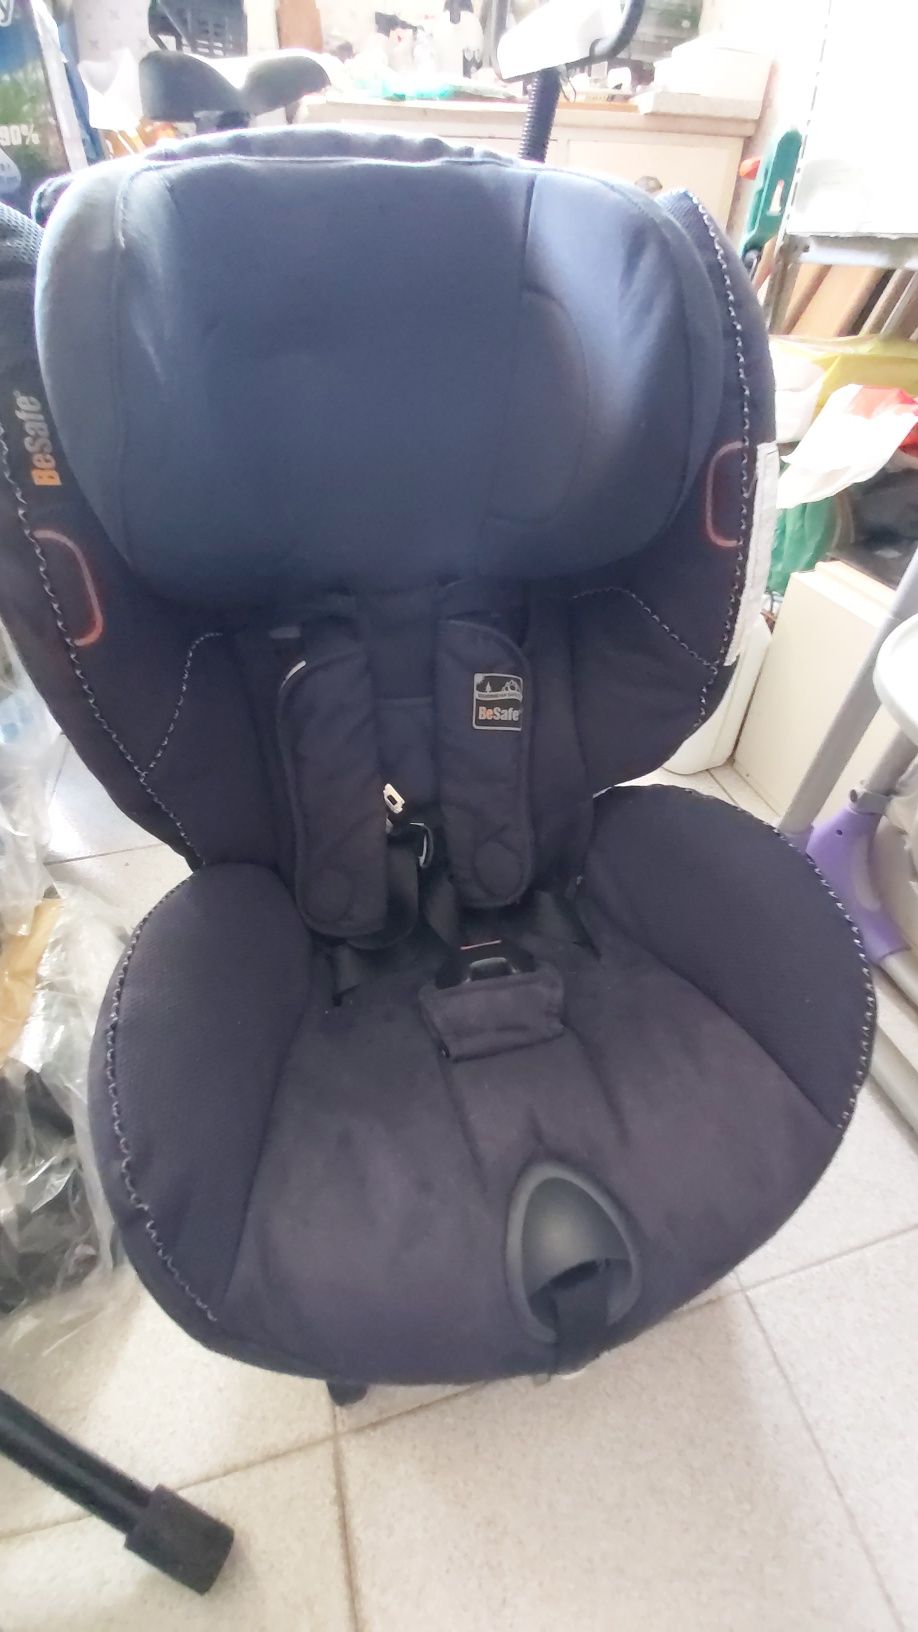 Cadeira auto bebé Besafe combi x3